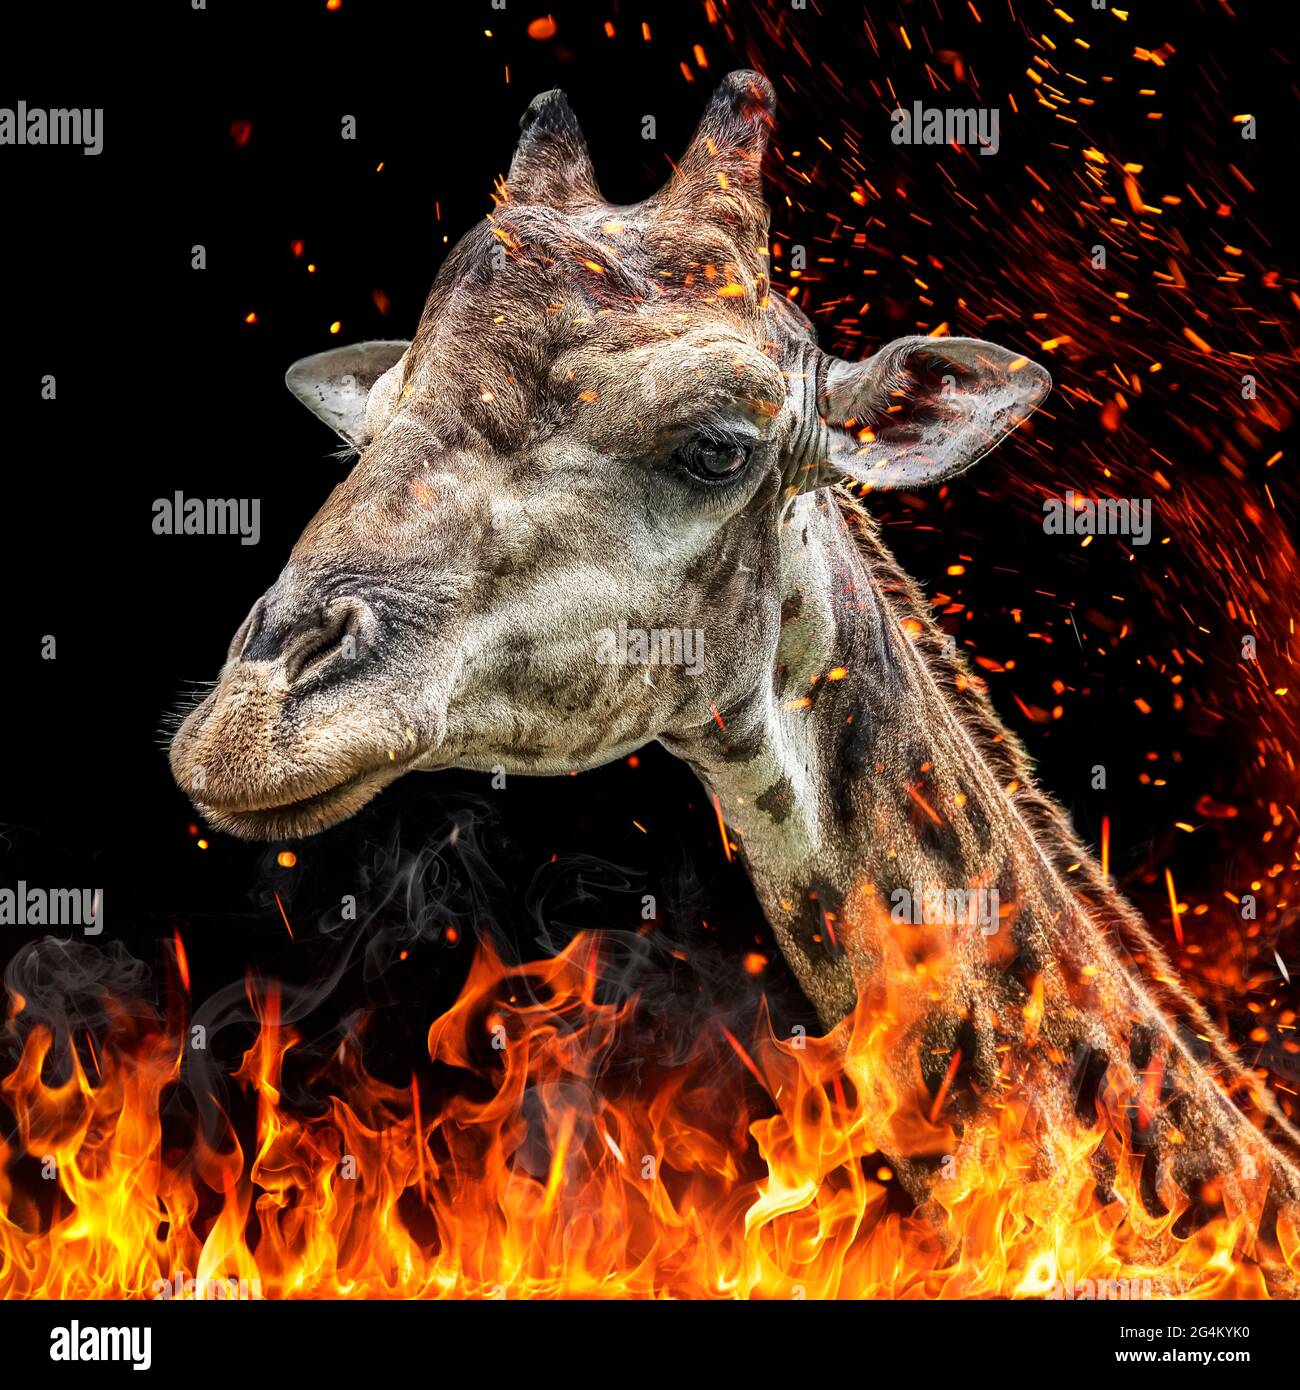 Wildlife in danger illustration - Giraffe in the fire Stock Photo